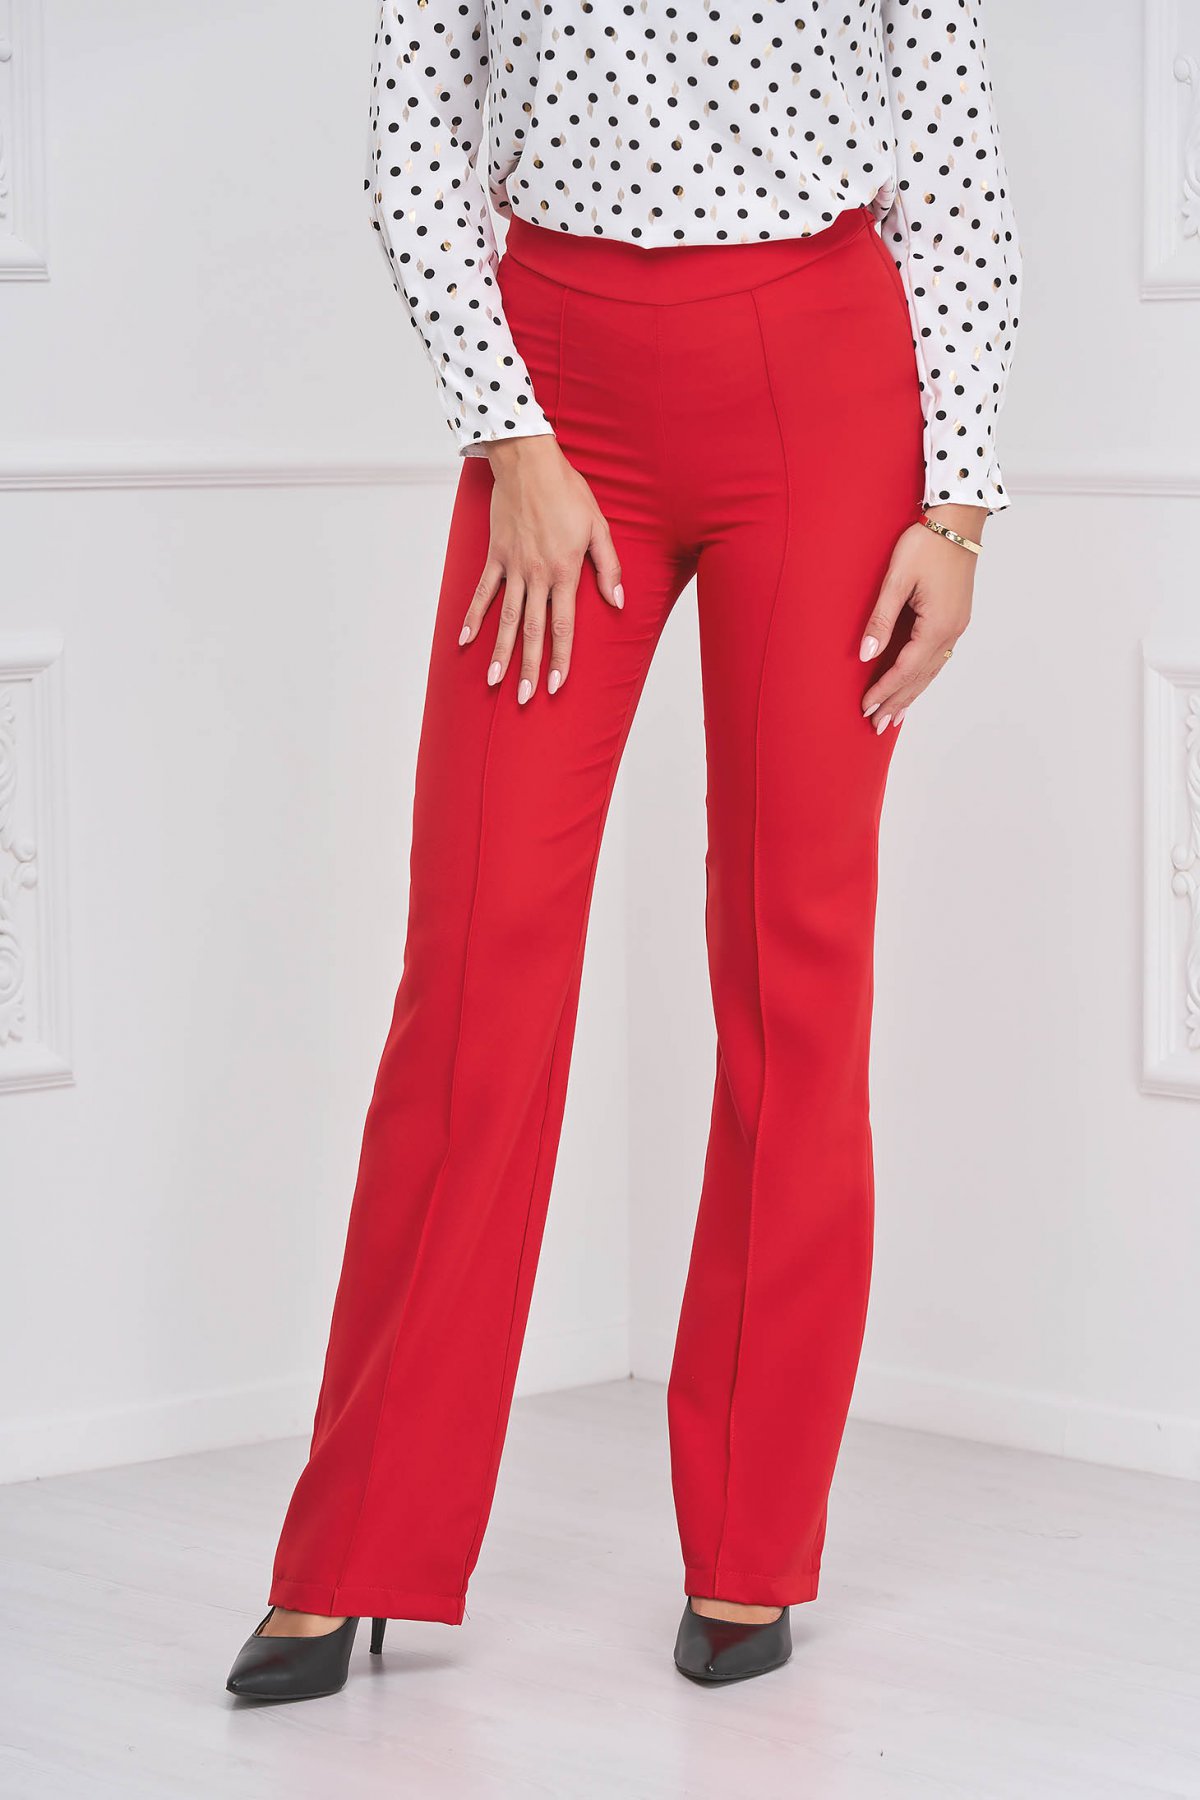 Pantaloni din stofa elastica rosii lungi evazati - StarShinerS